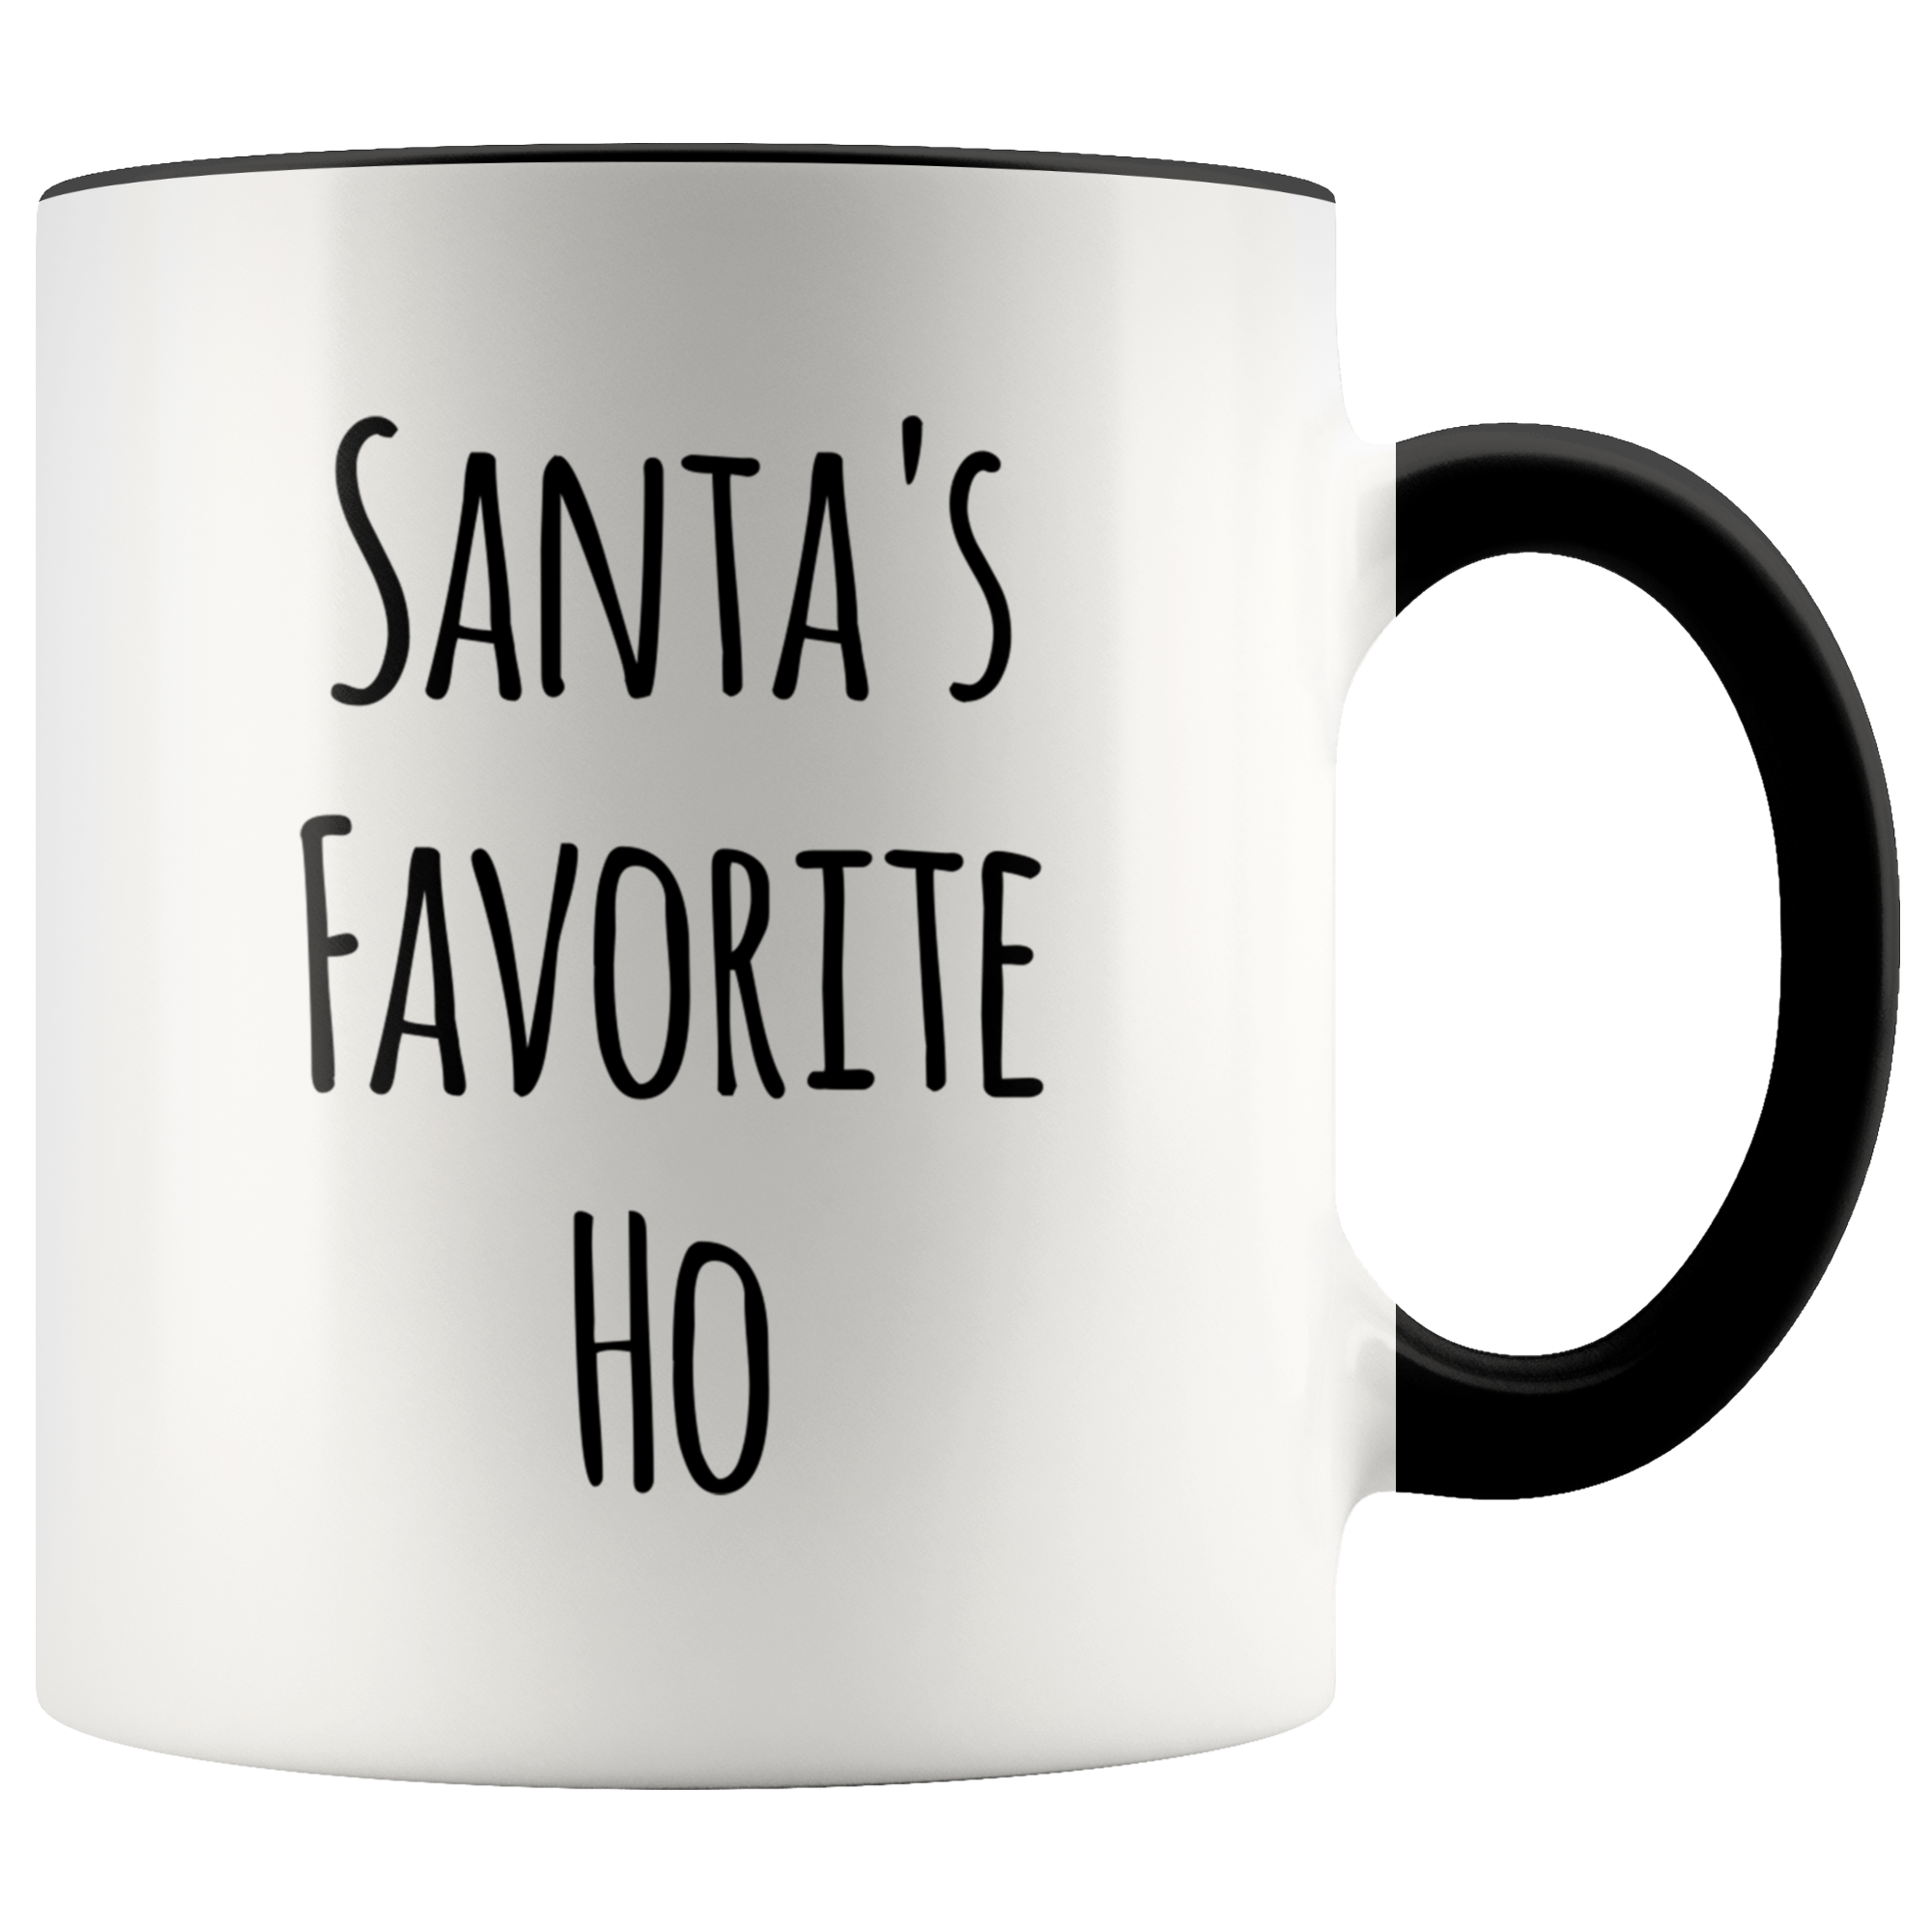 Santa's Favorite Ho Mug Holiday Gifts Naughty Christmas Coffee Mugs Funny Gag Gifts Gift Exchange Ideas Under 20